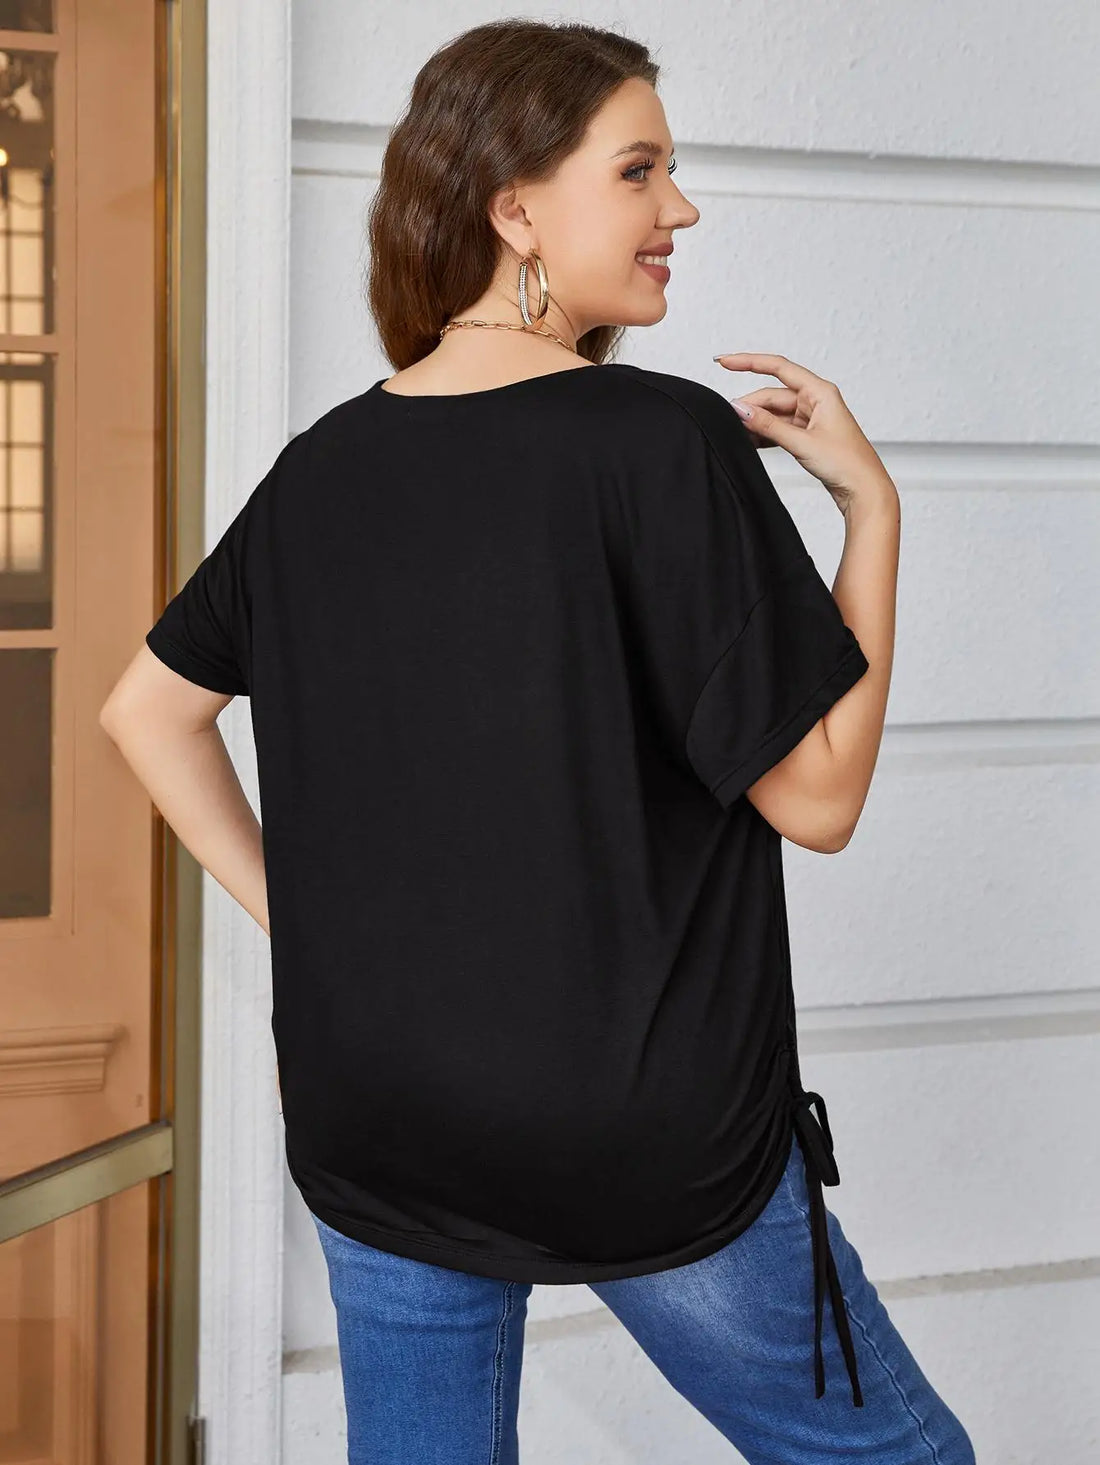 Plus Size Lace Up Elastic Waist Black Pleated Women Short Sleevess Tops V Neck Plug Size 4XL Casual Loose Blouse Oversized Shirt - Sellinashop